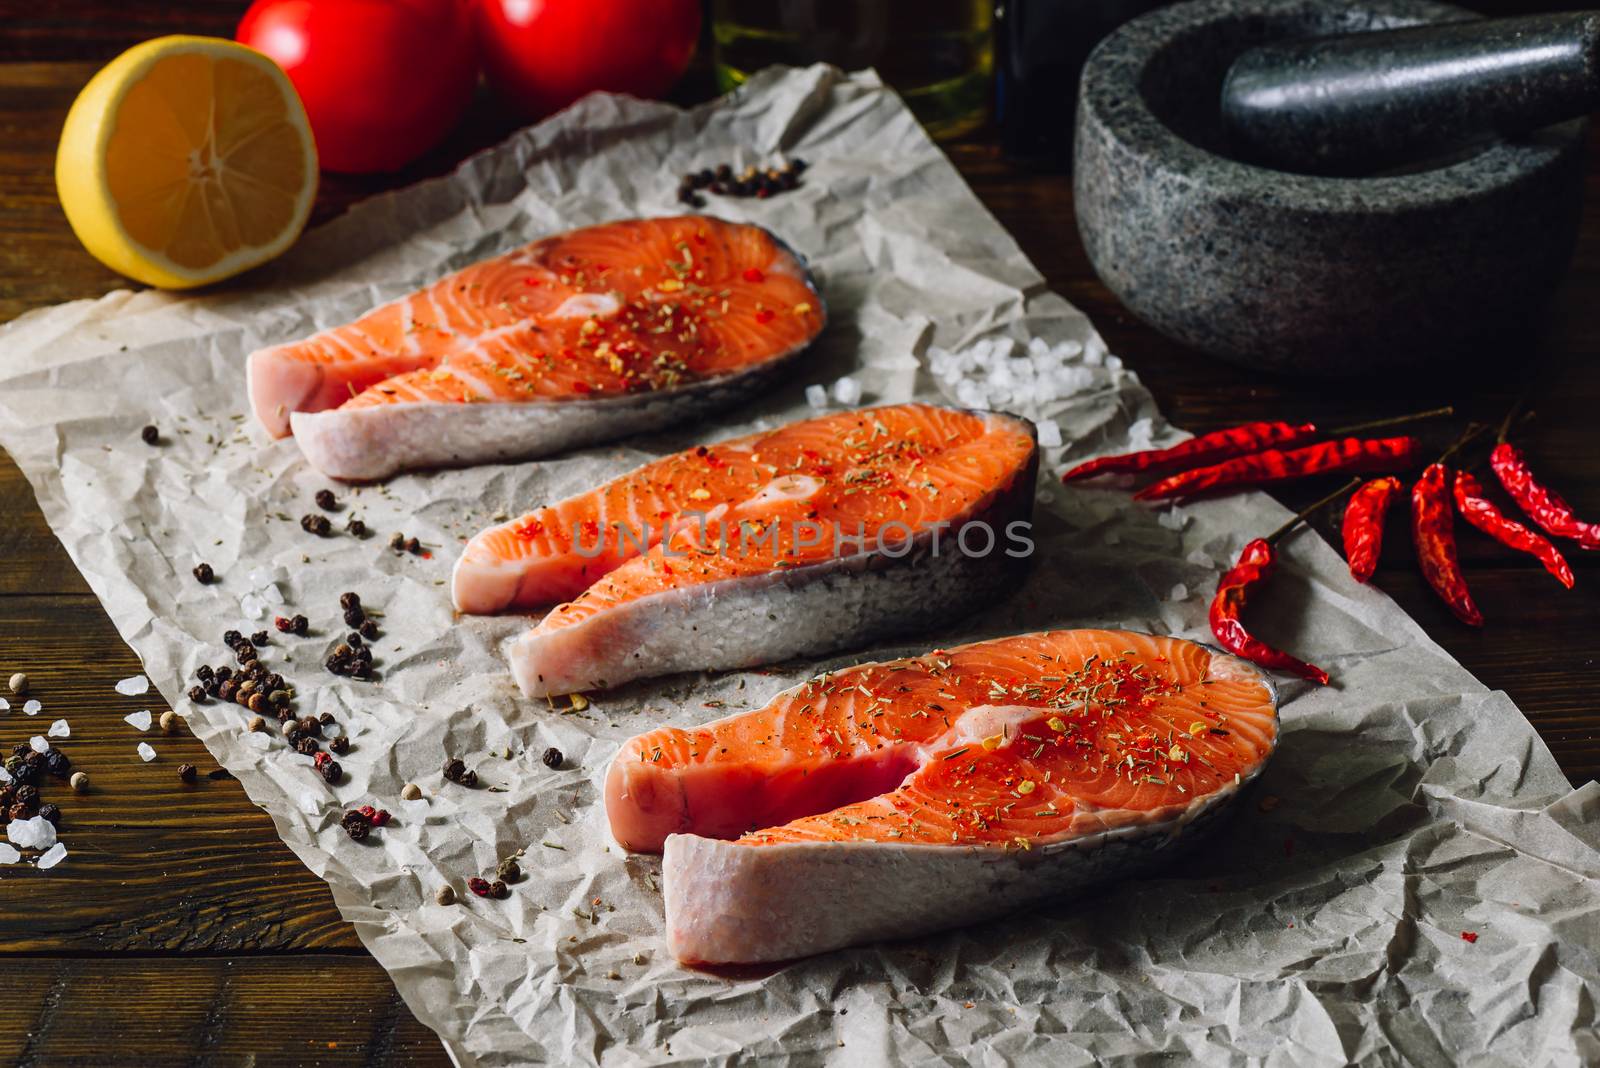 Three Salmon Steaks Prepared for Cooking by Seva_blsv